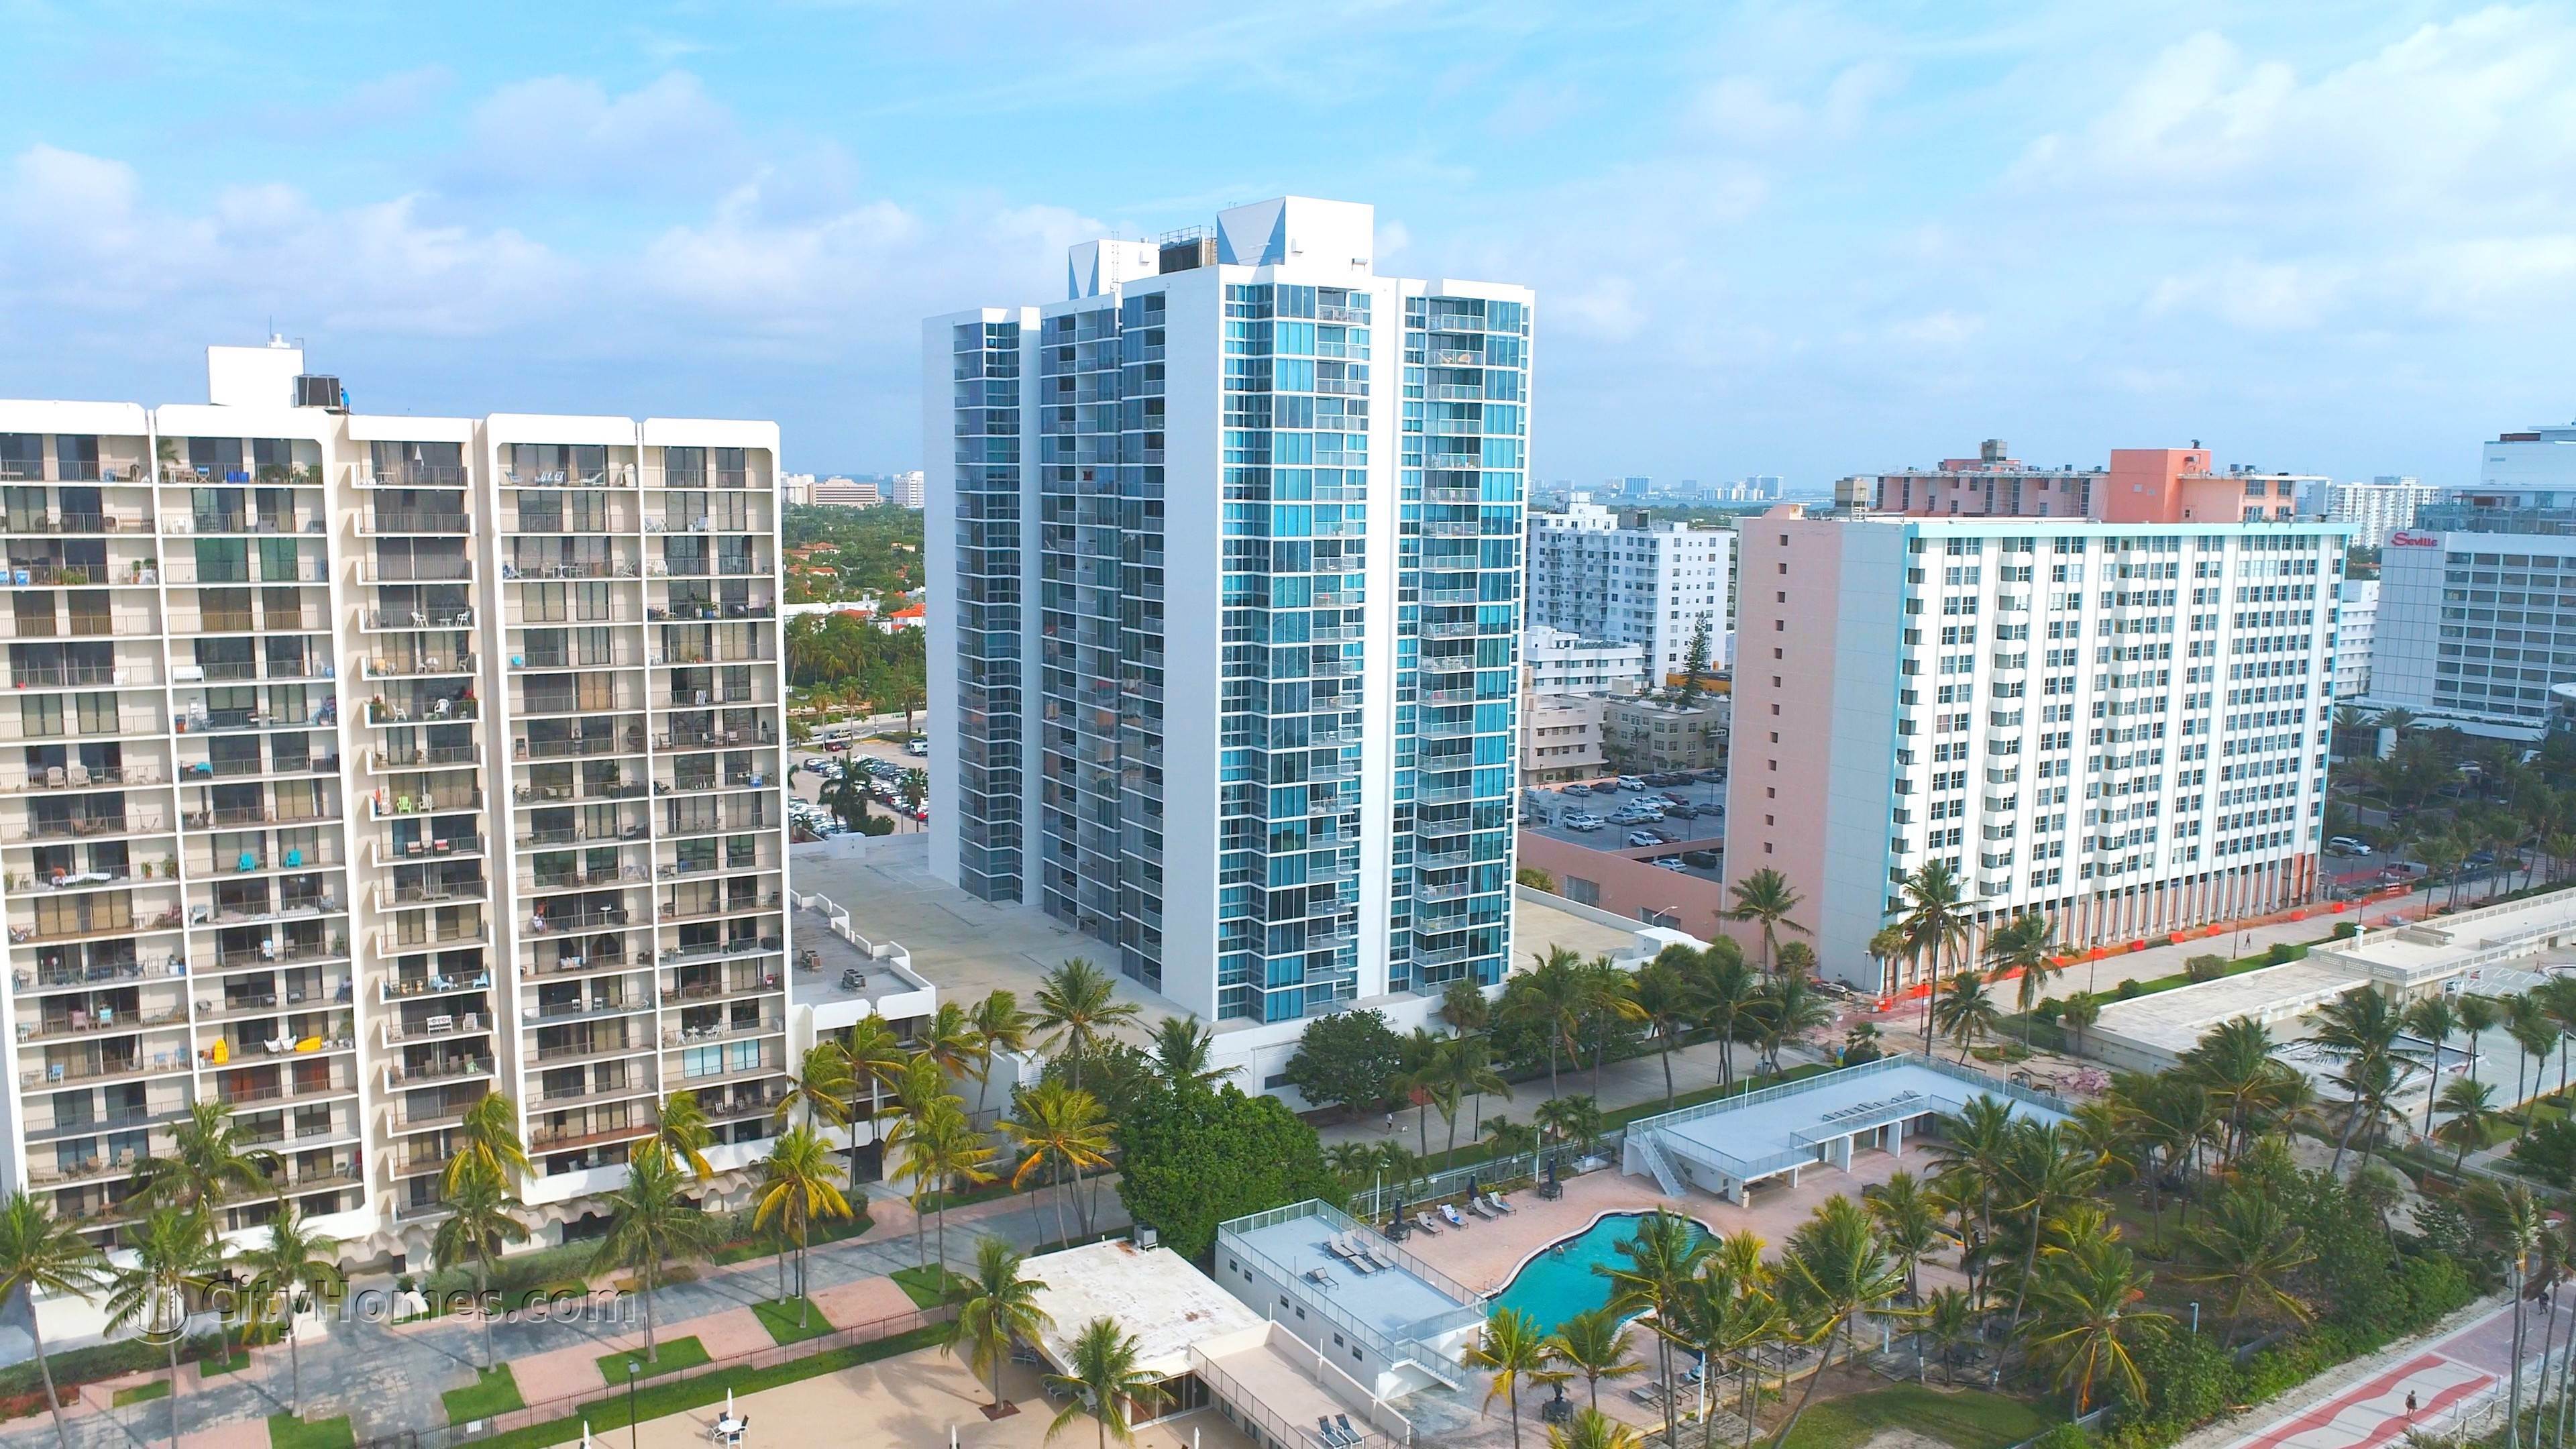 2. MIRASOL OCEAN TOWERS building at 2655 Collins Avenue, Mid Beach, Miami Beach, FL 33140